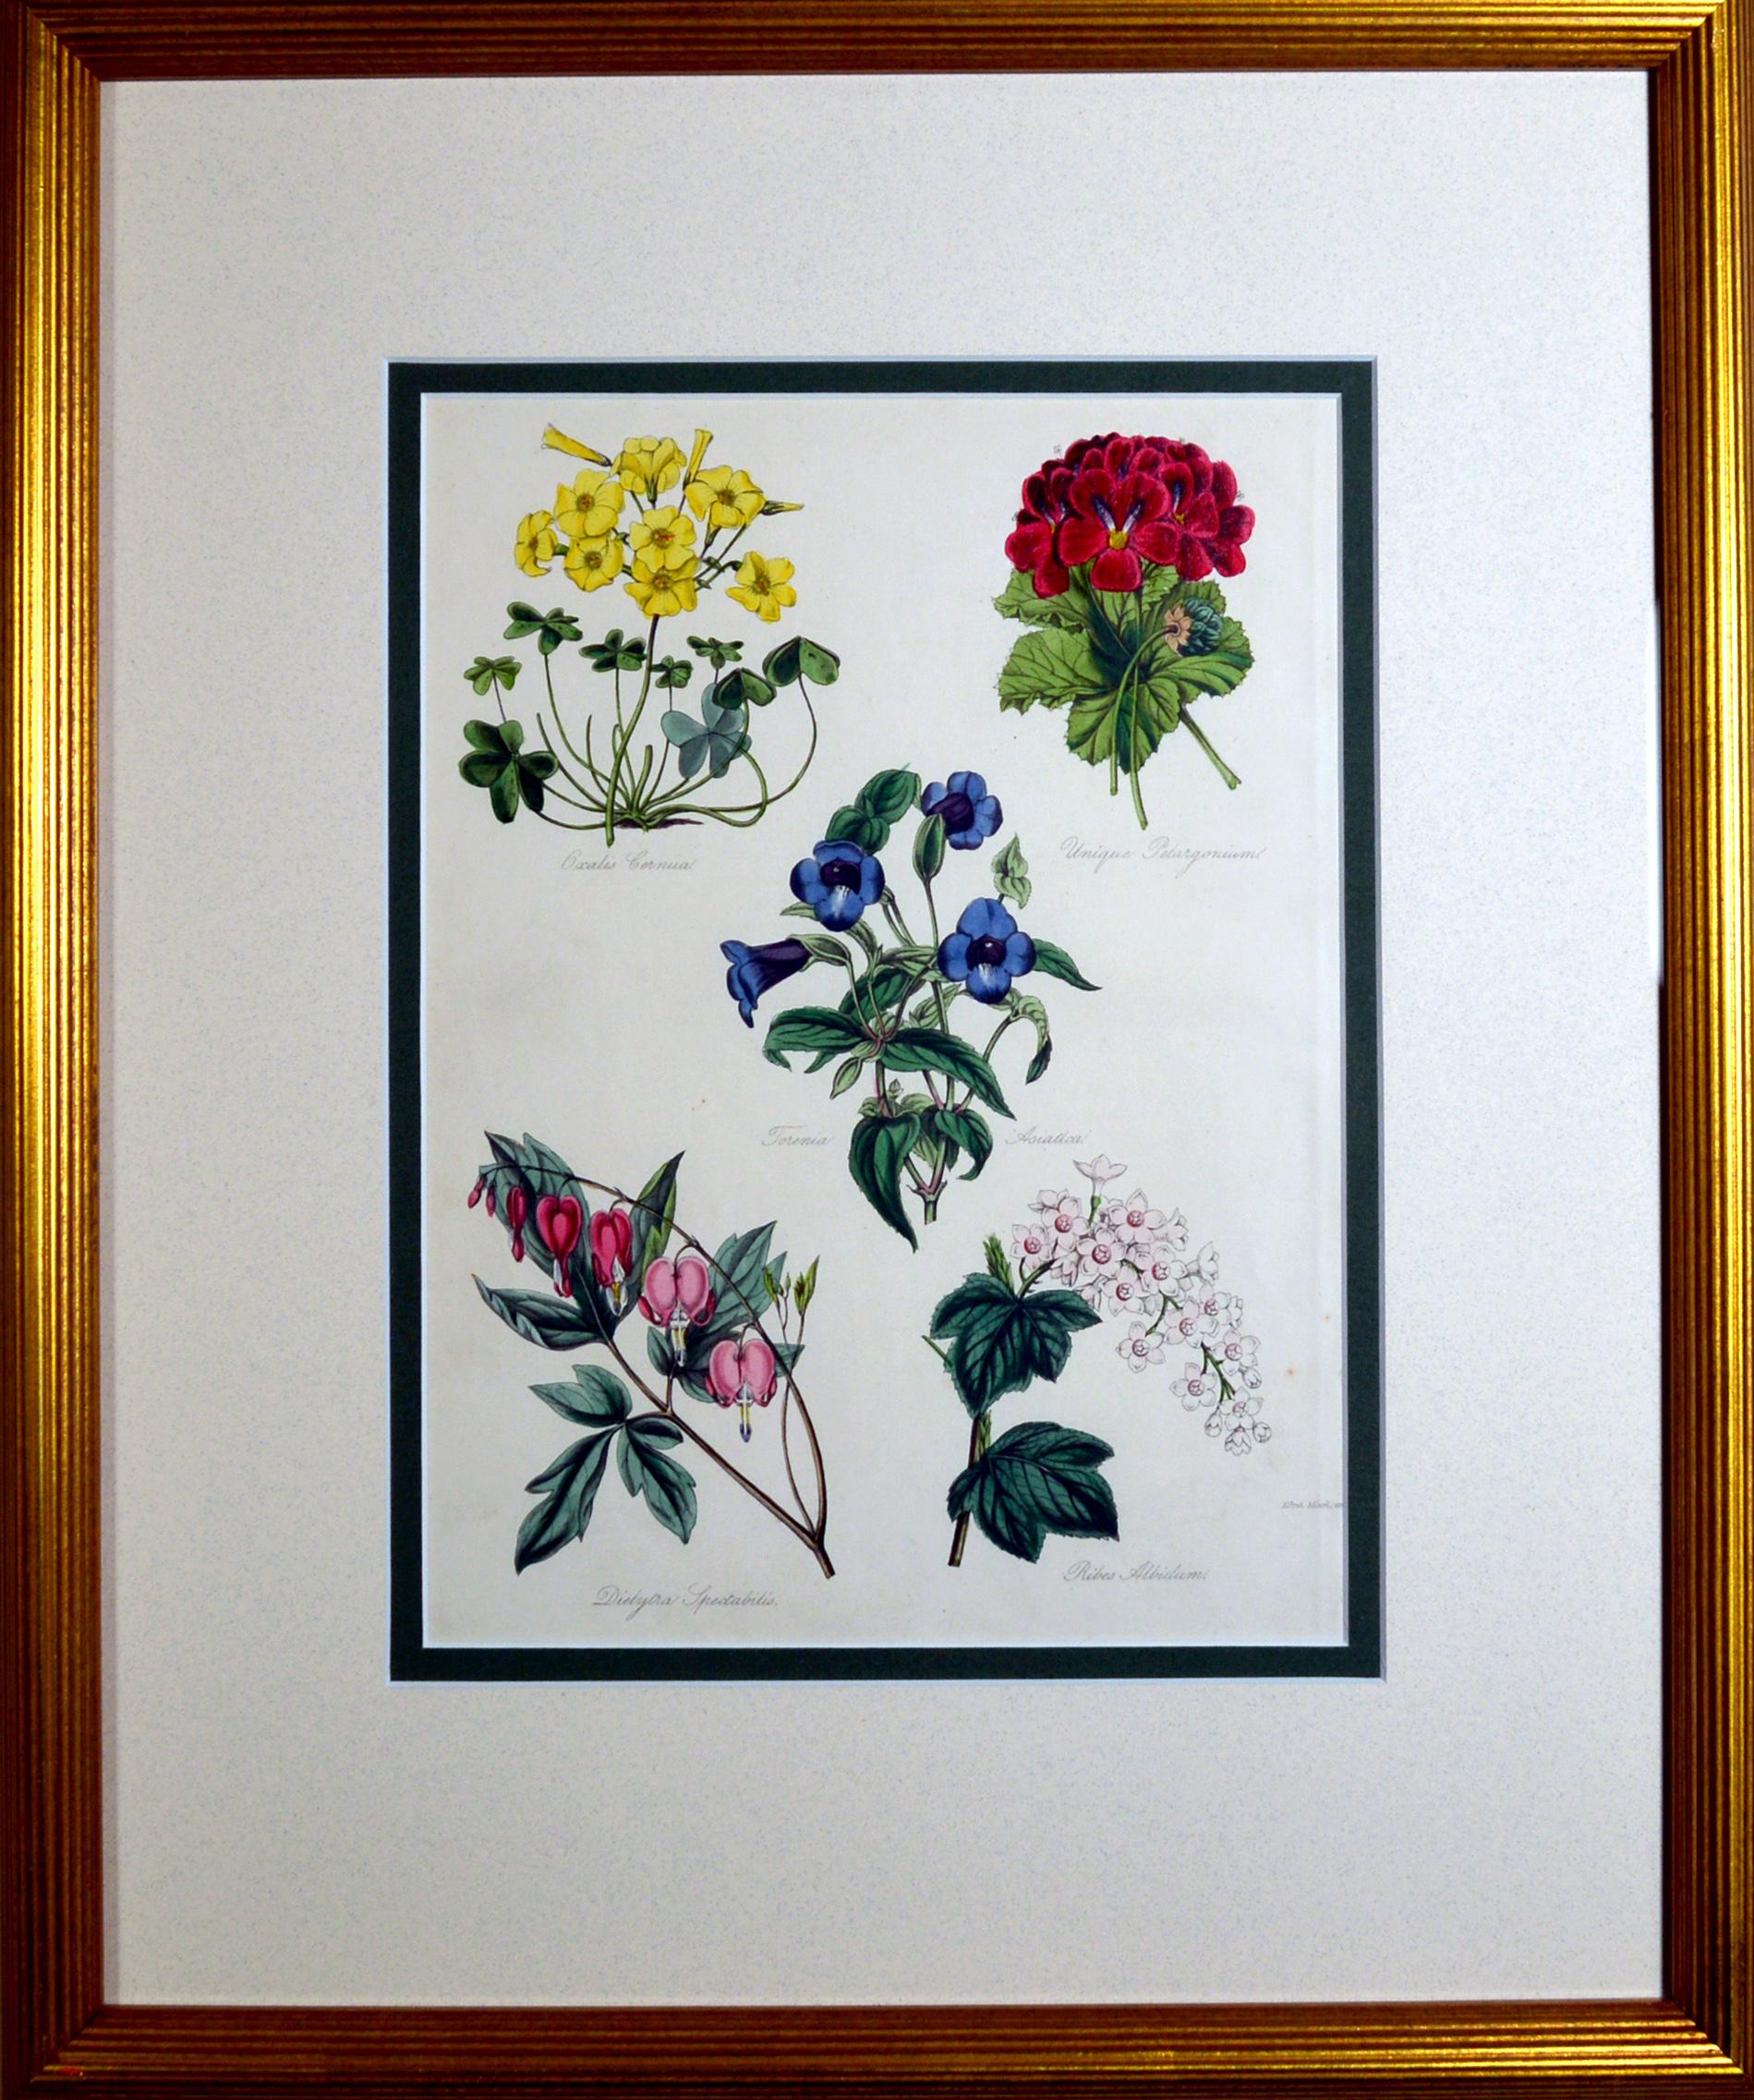 Set of Botanical Prints,
W. Thompson
